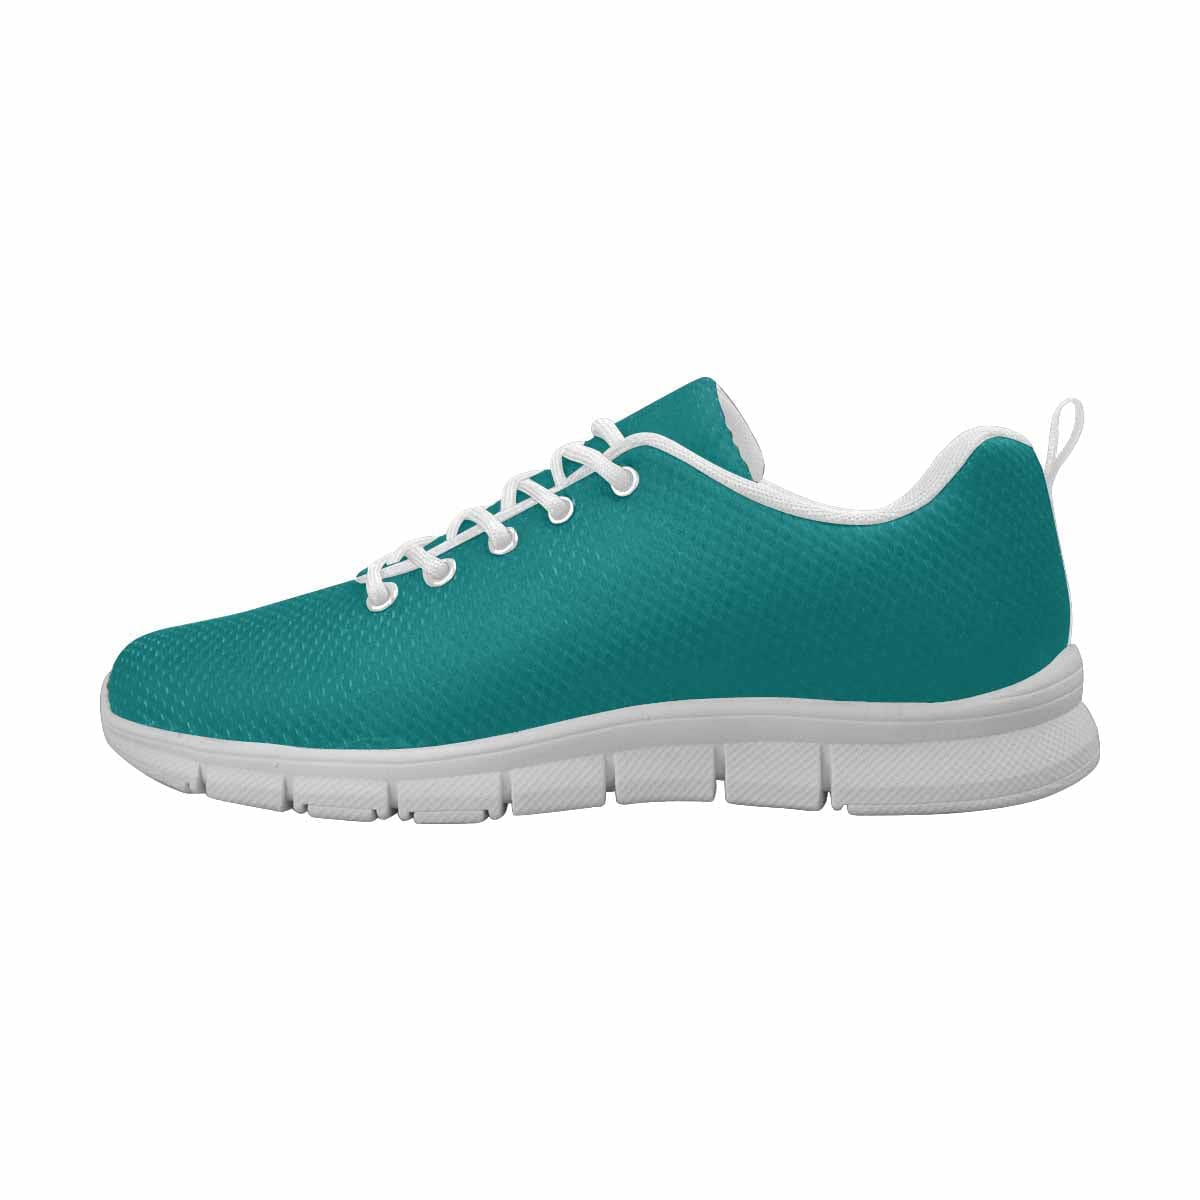 Sneakers For Men Dark Teal Green - Running Shoes - Mens | Sneakers | Running